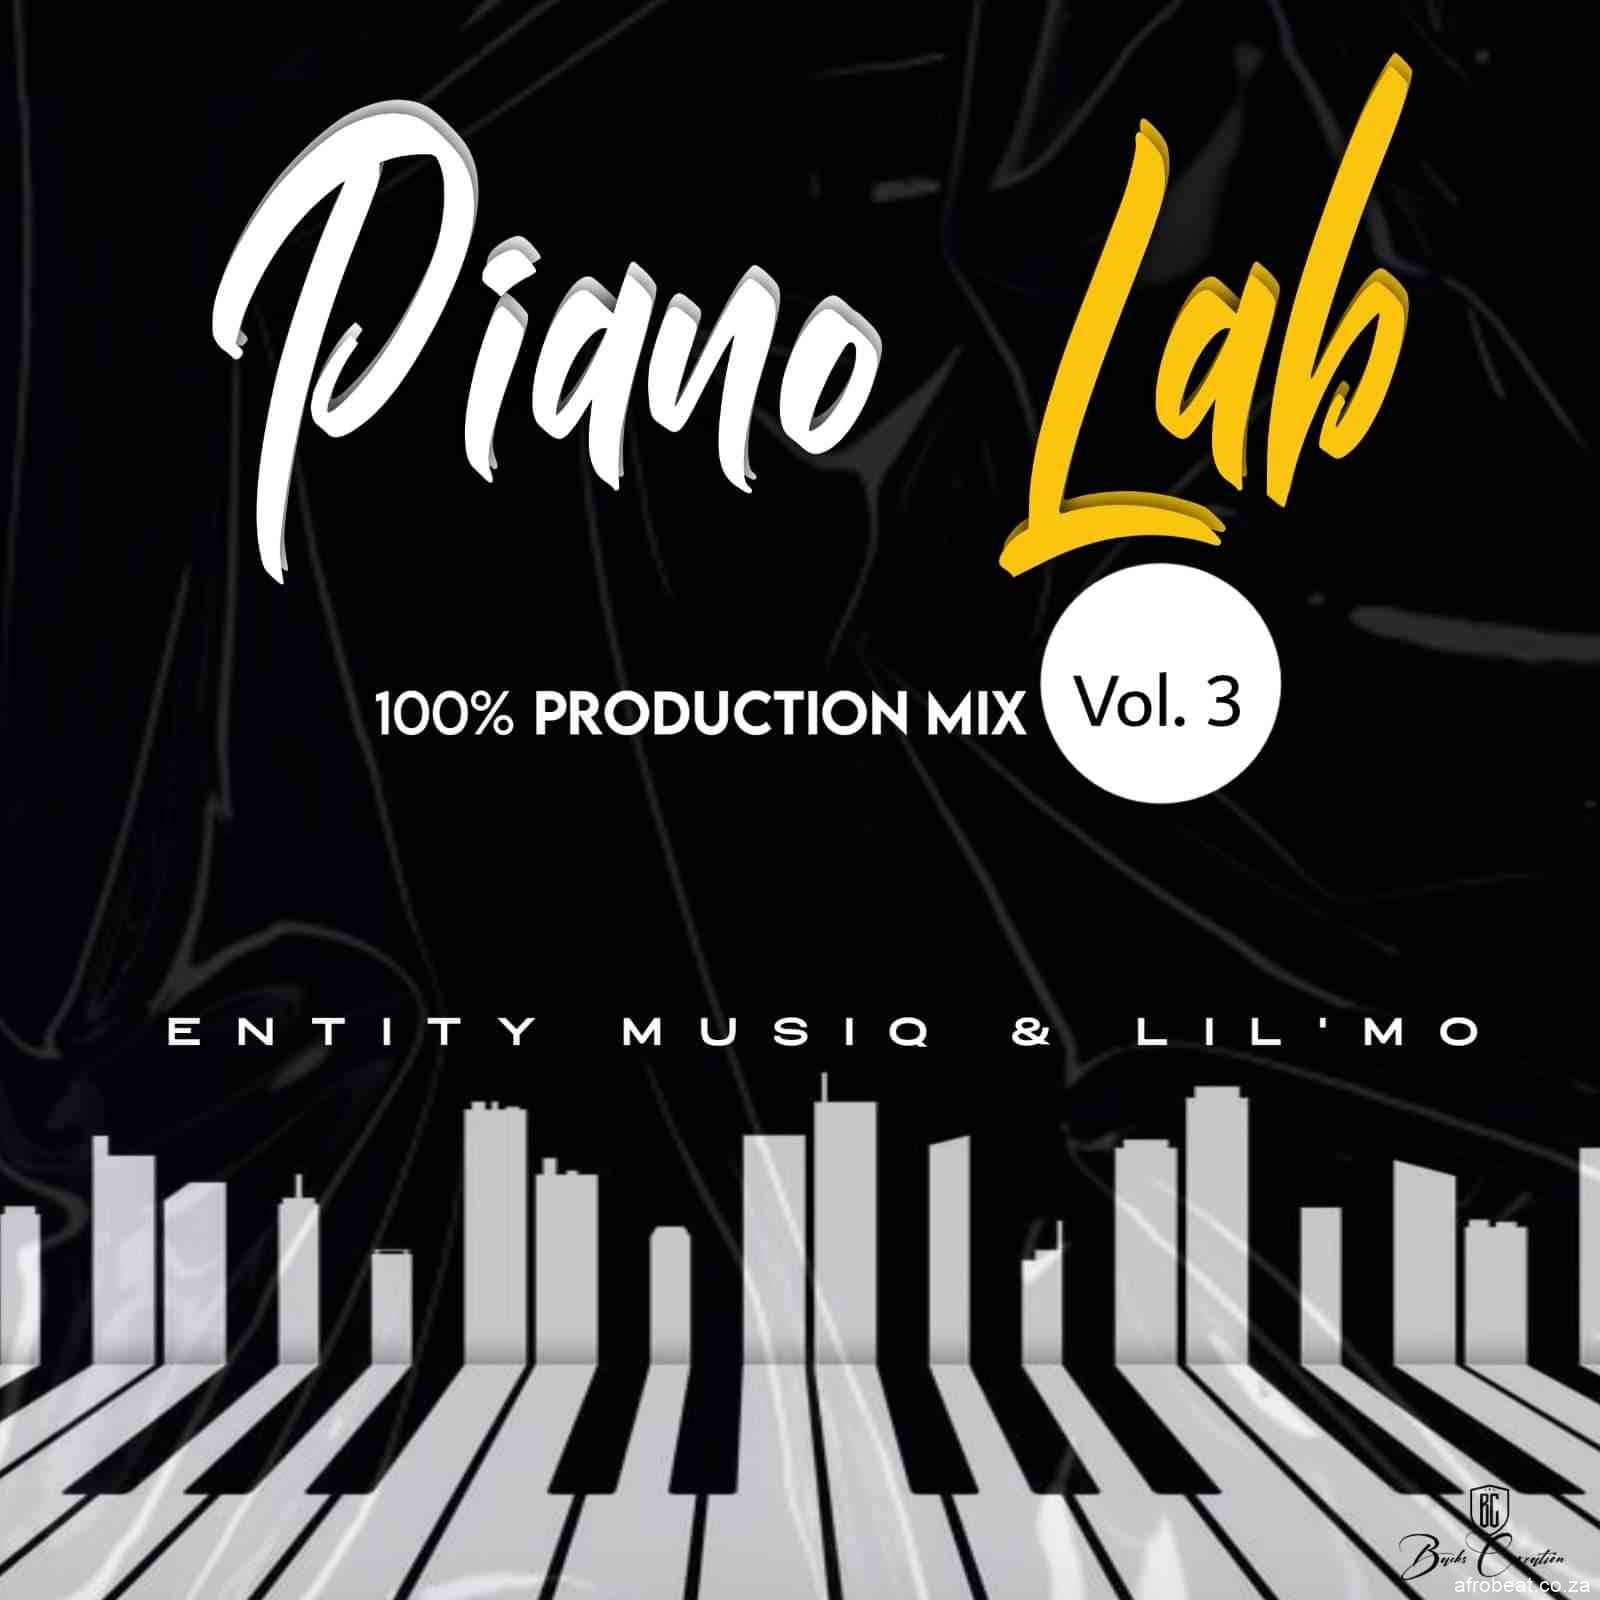 184316348 322242619469909 6006390137229048817 n - Entity MusiQ & Lil’Mo – Piano Lab Vol 3 (100% Production Mix)